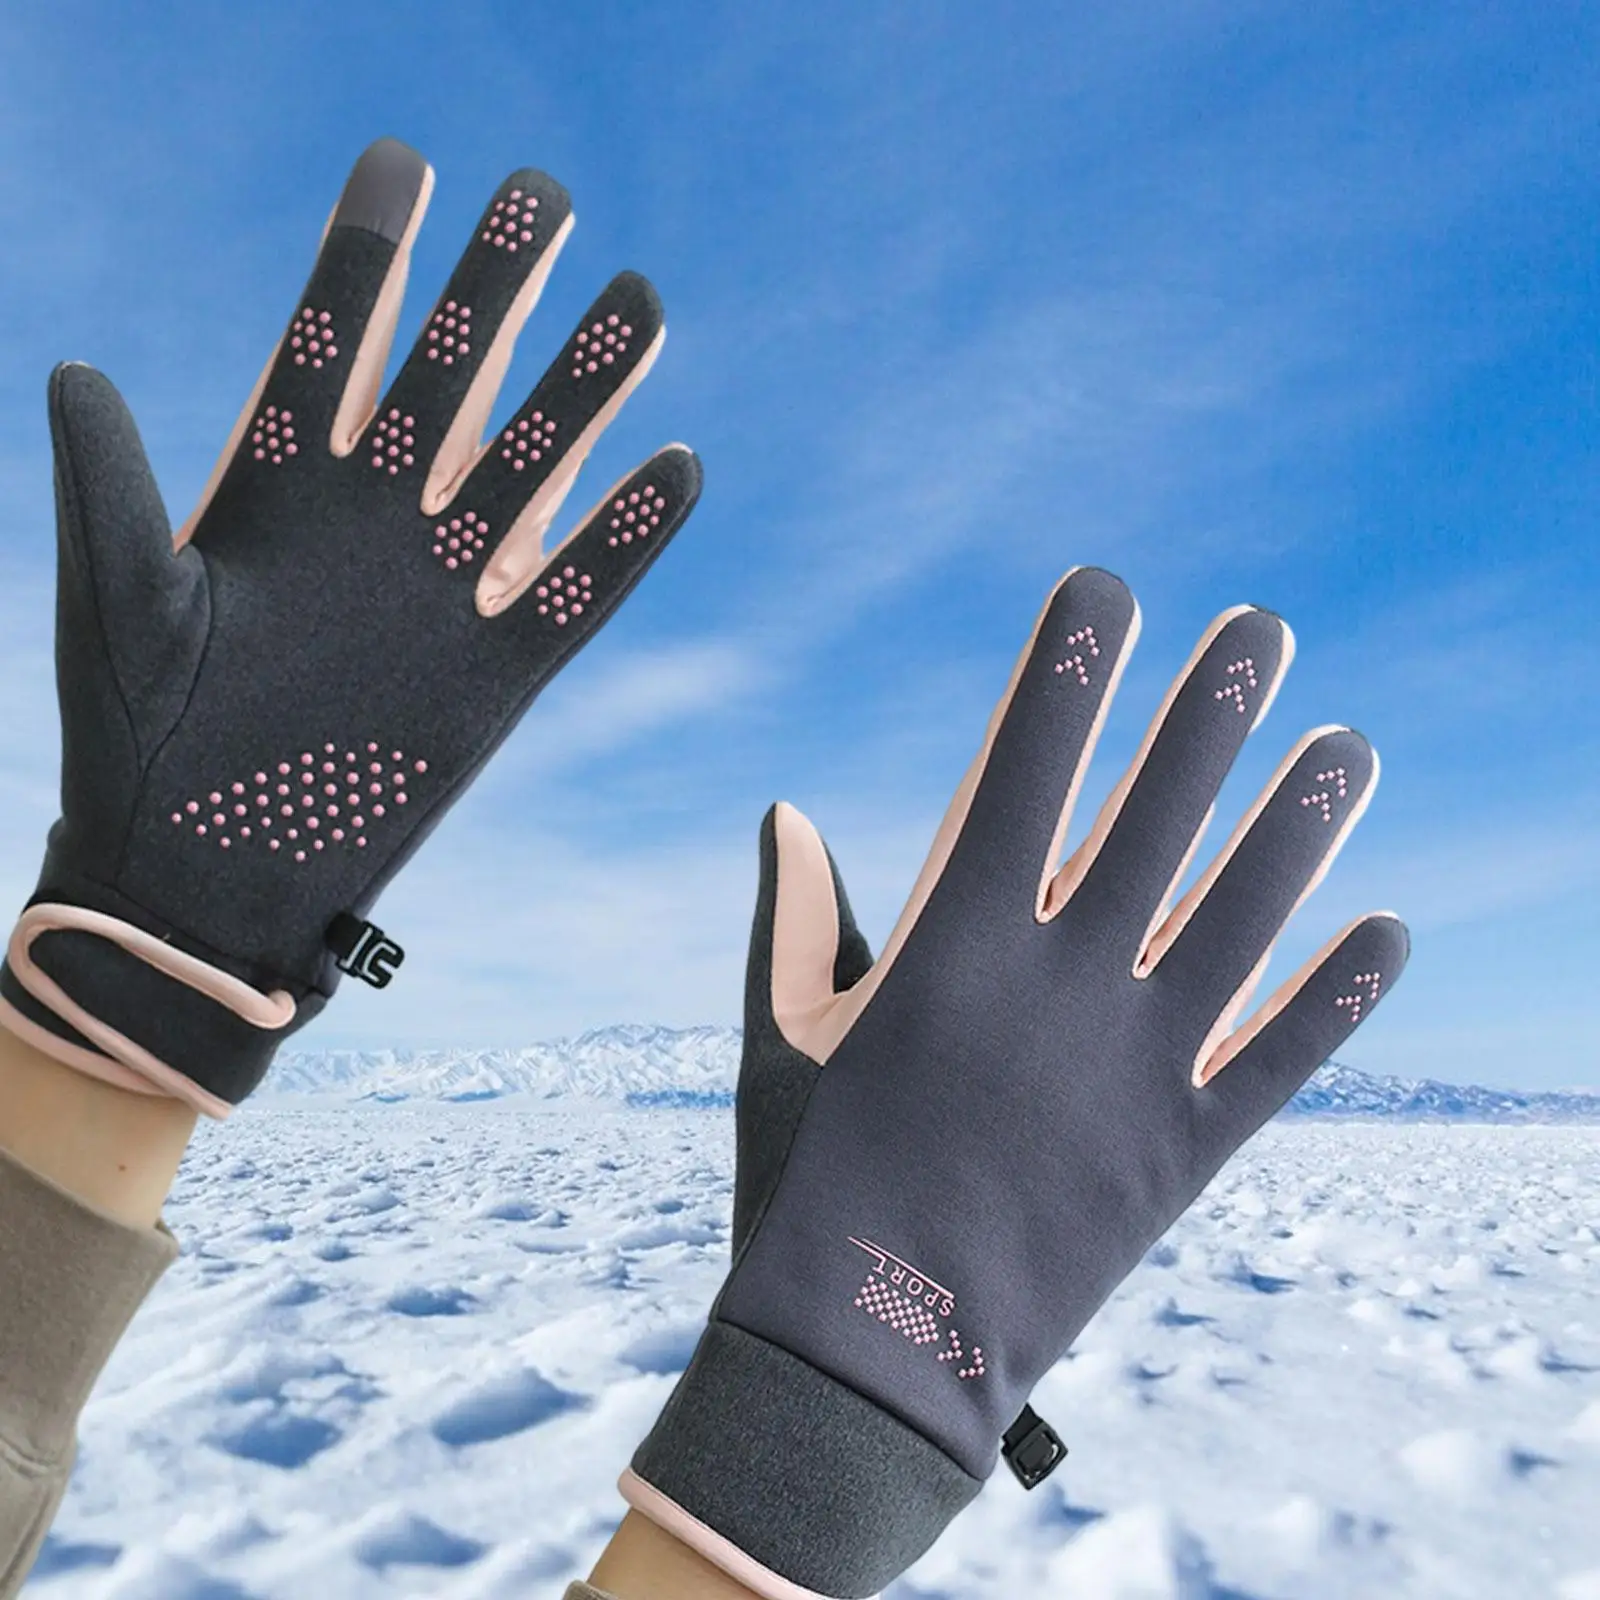 Winter Warm Cycling Gloves Touchscreen Gloves for Running Outdoor Biking